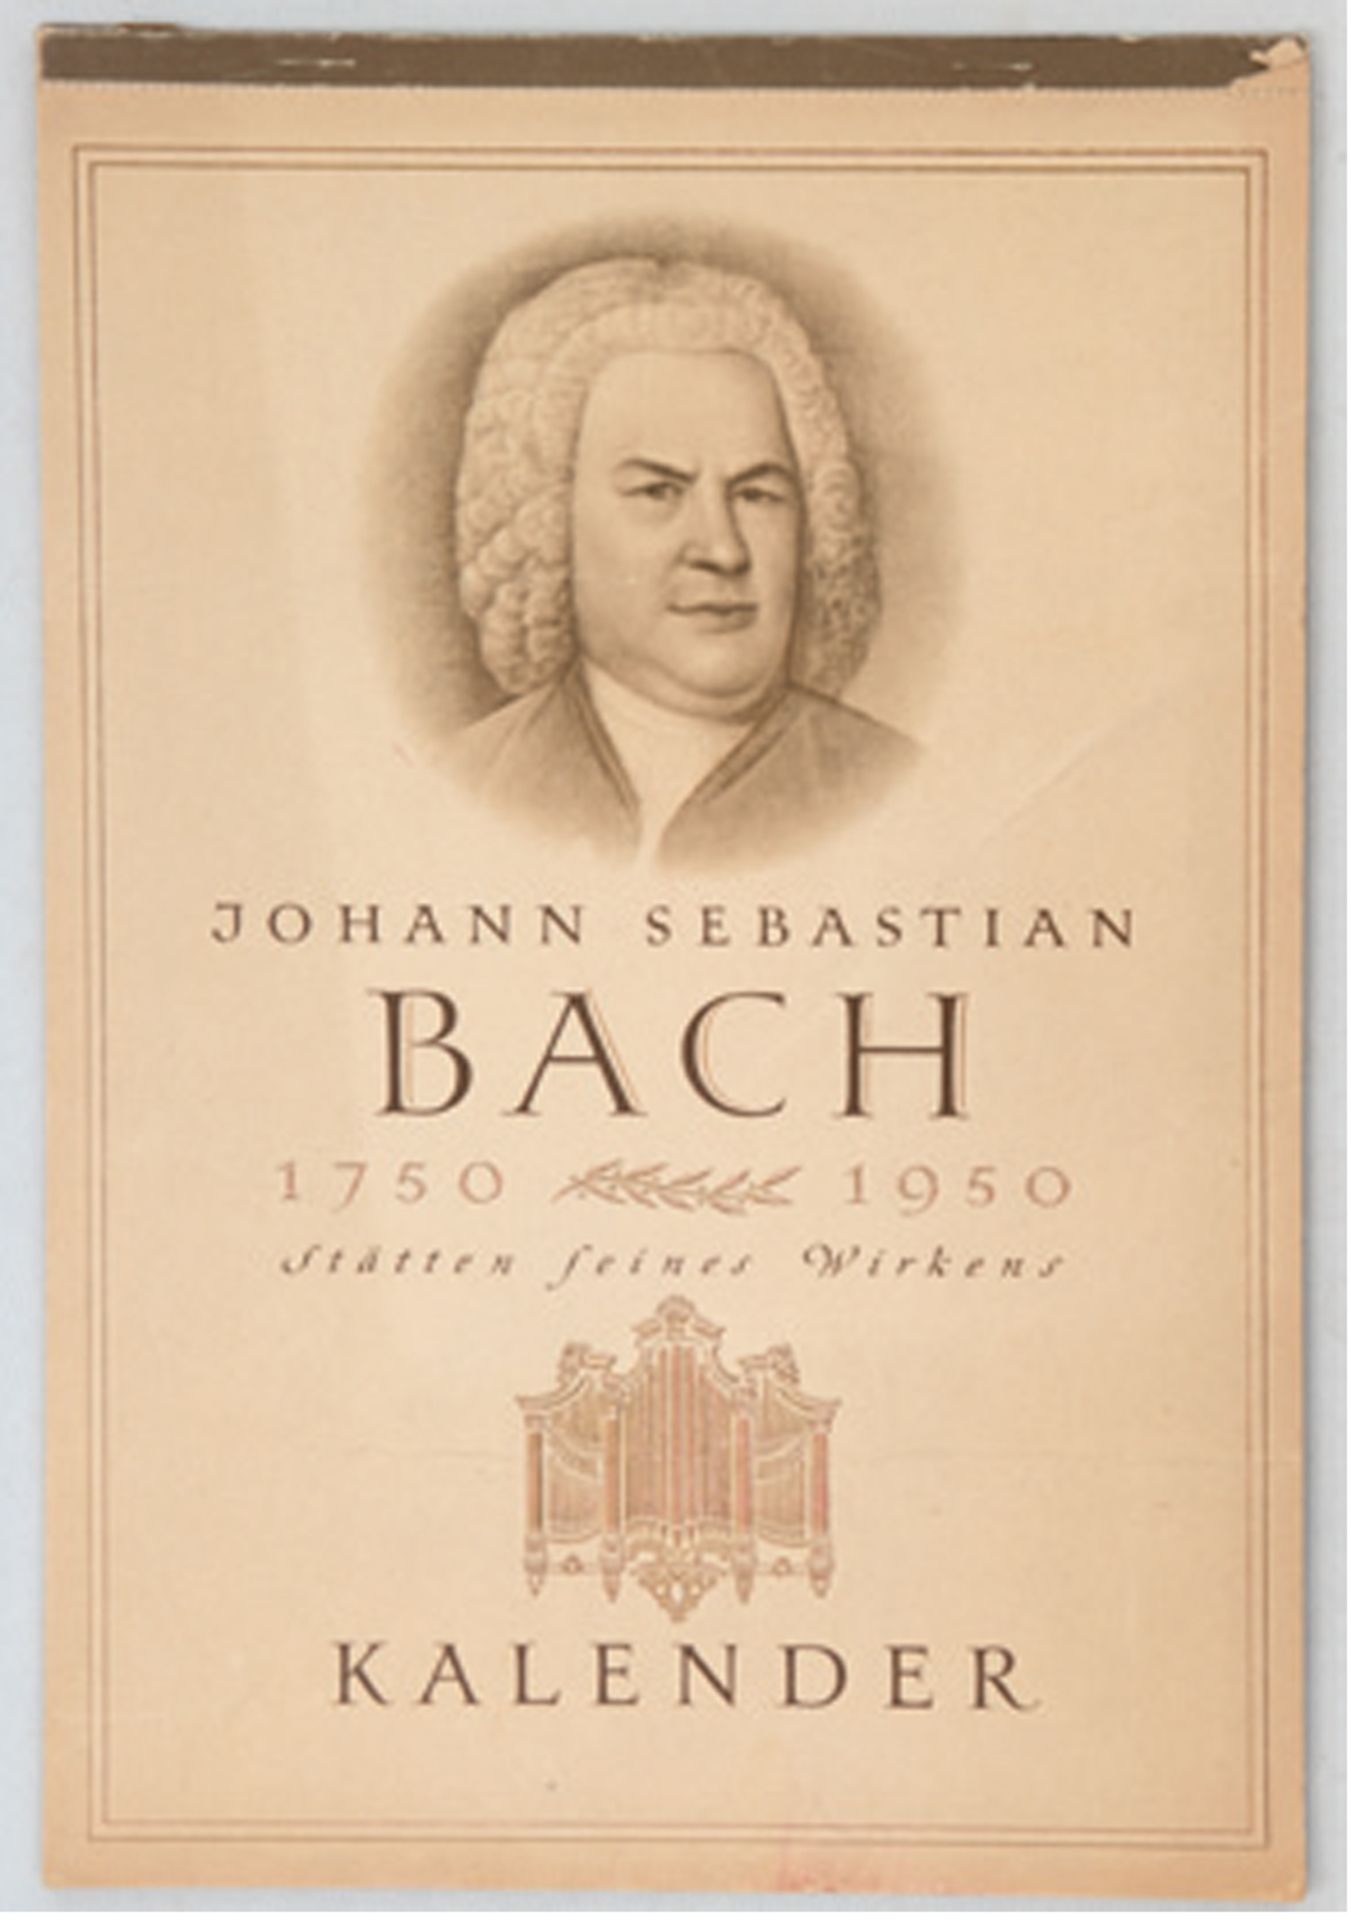 Kalender Johann Sebastian Bach "Stätten feines Wirkens", 1 Deckblatt, 1 Titelblatt, 12 farbige Tafe - Bild 2 aus 2